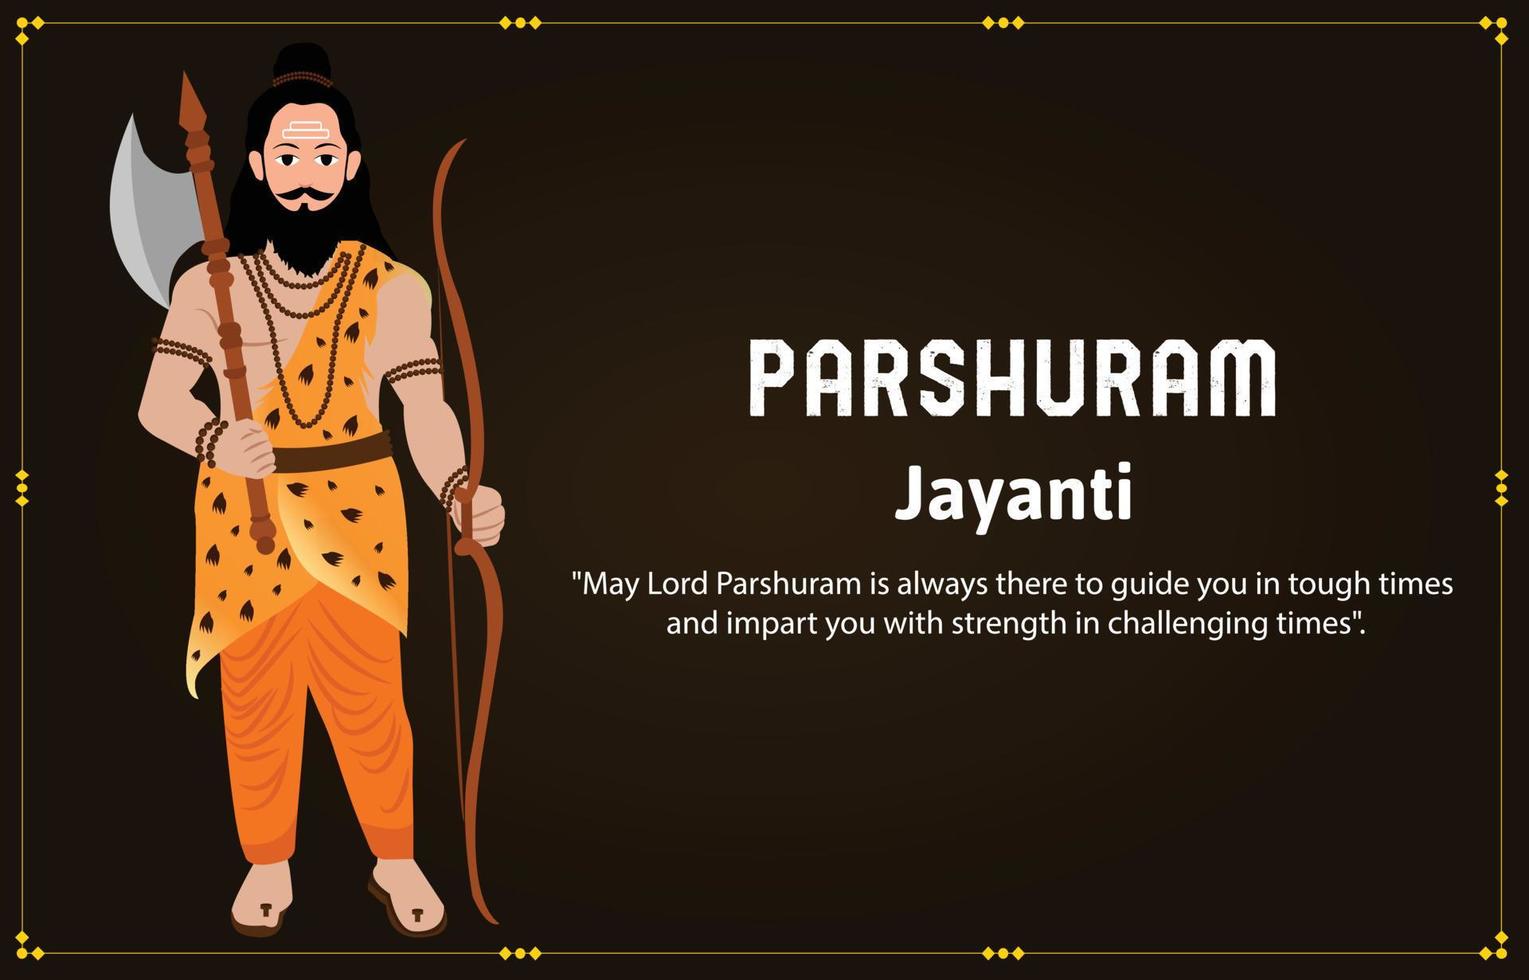 Parshuram jayanti lord parasurama indian hindu festival celebration vector illustrations